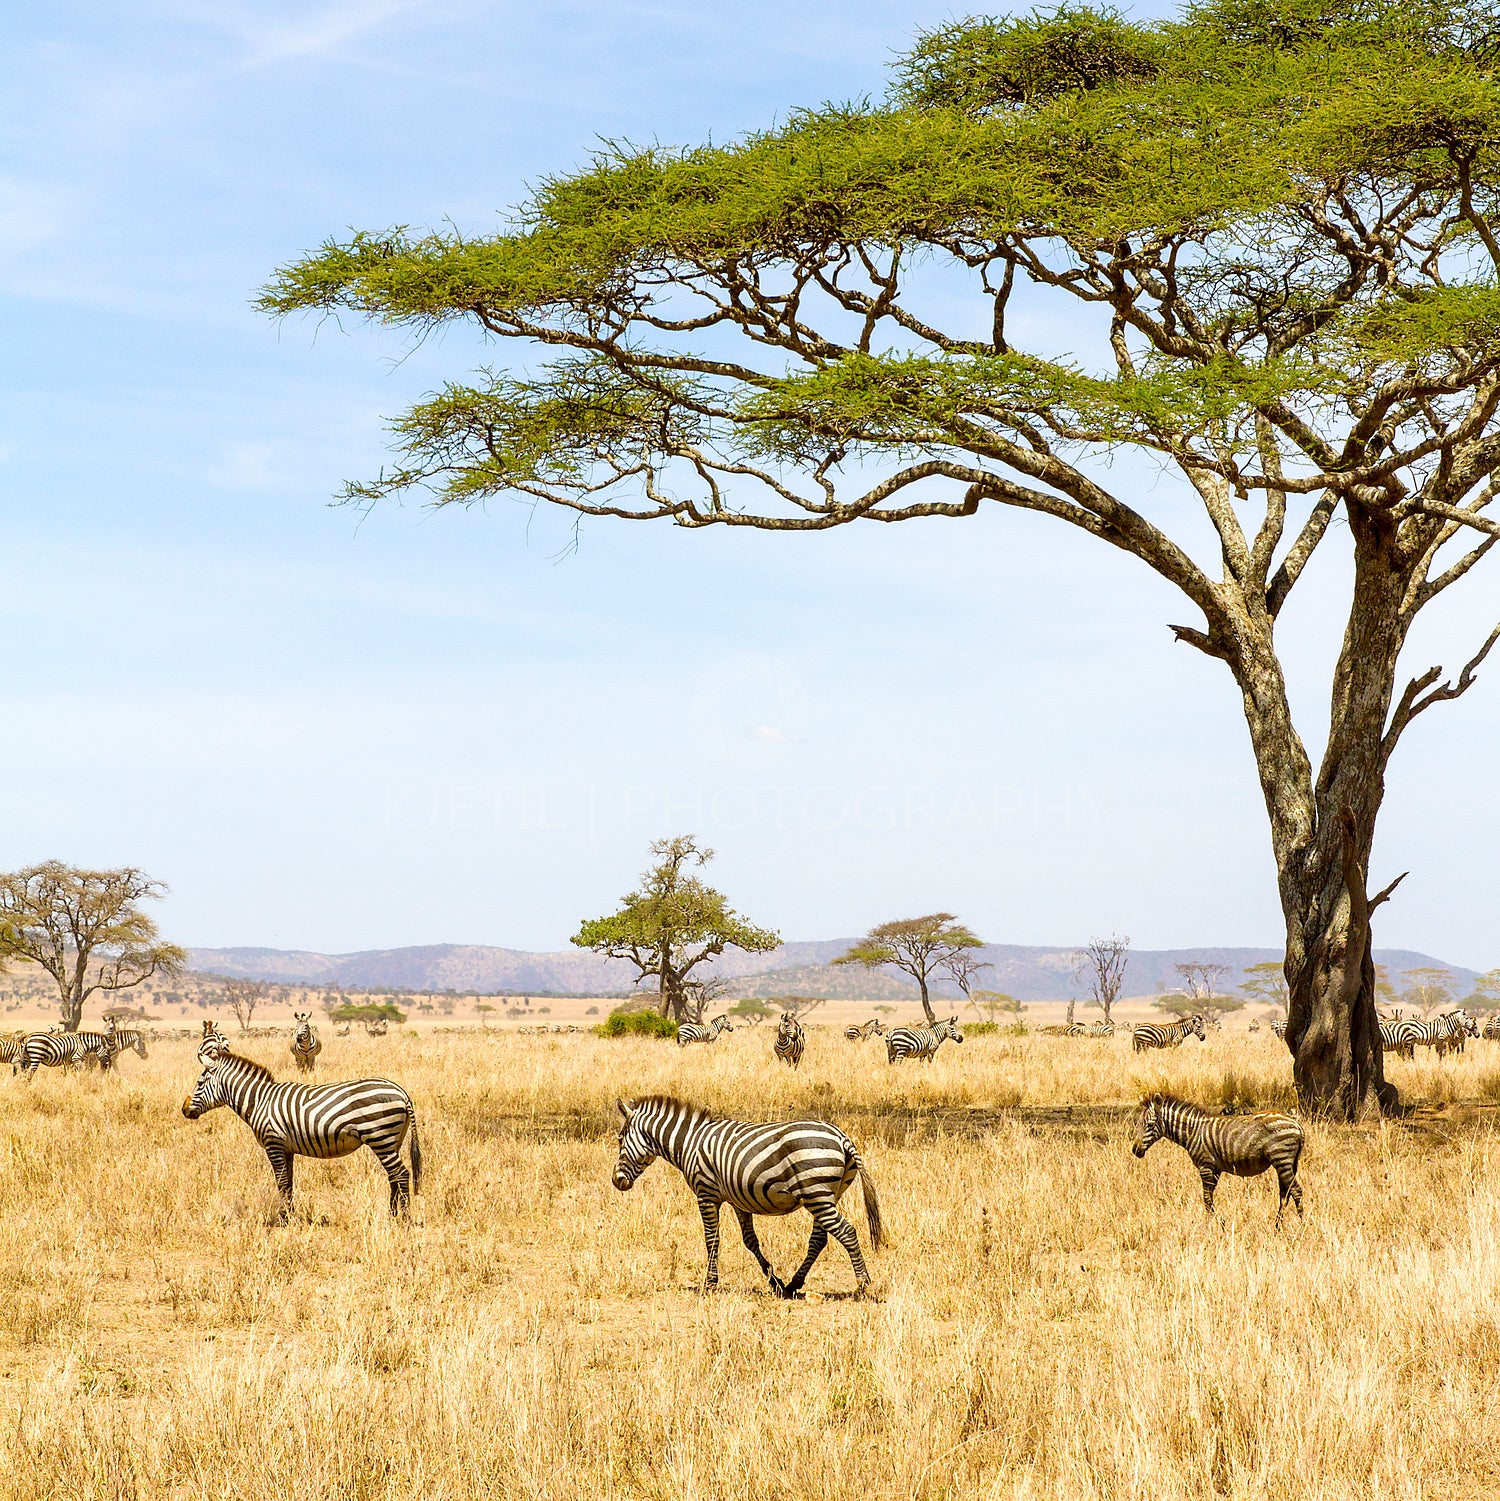 Zebras eats grass at the savannah in Africa